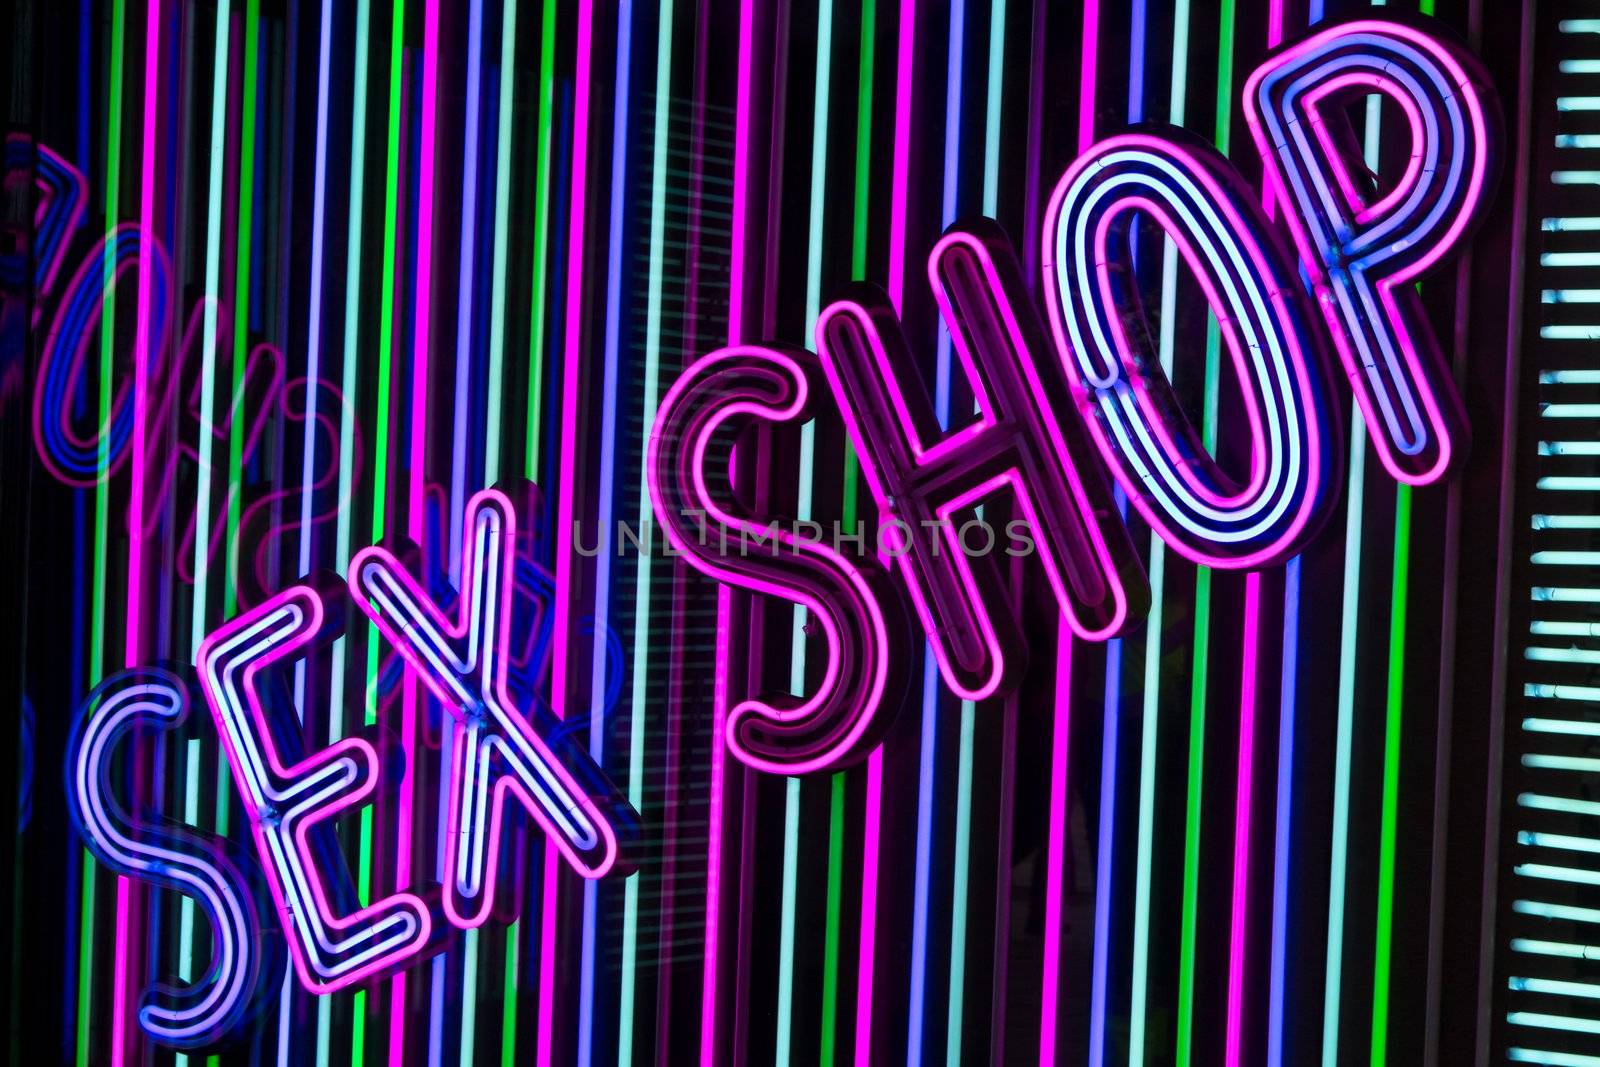 Neon sex shop sign by kyrien